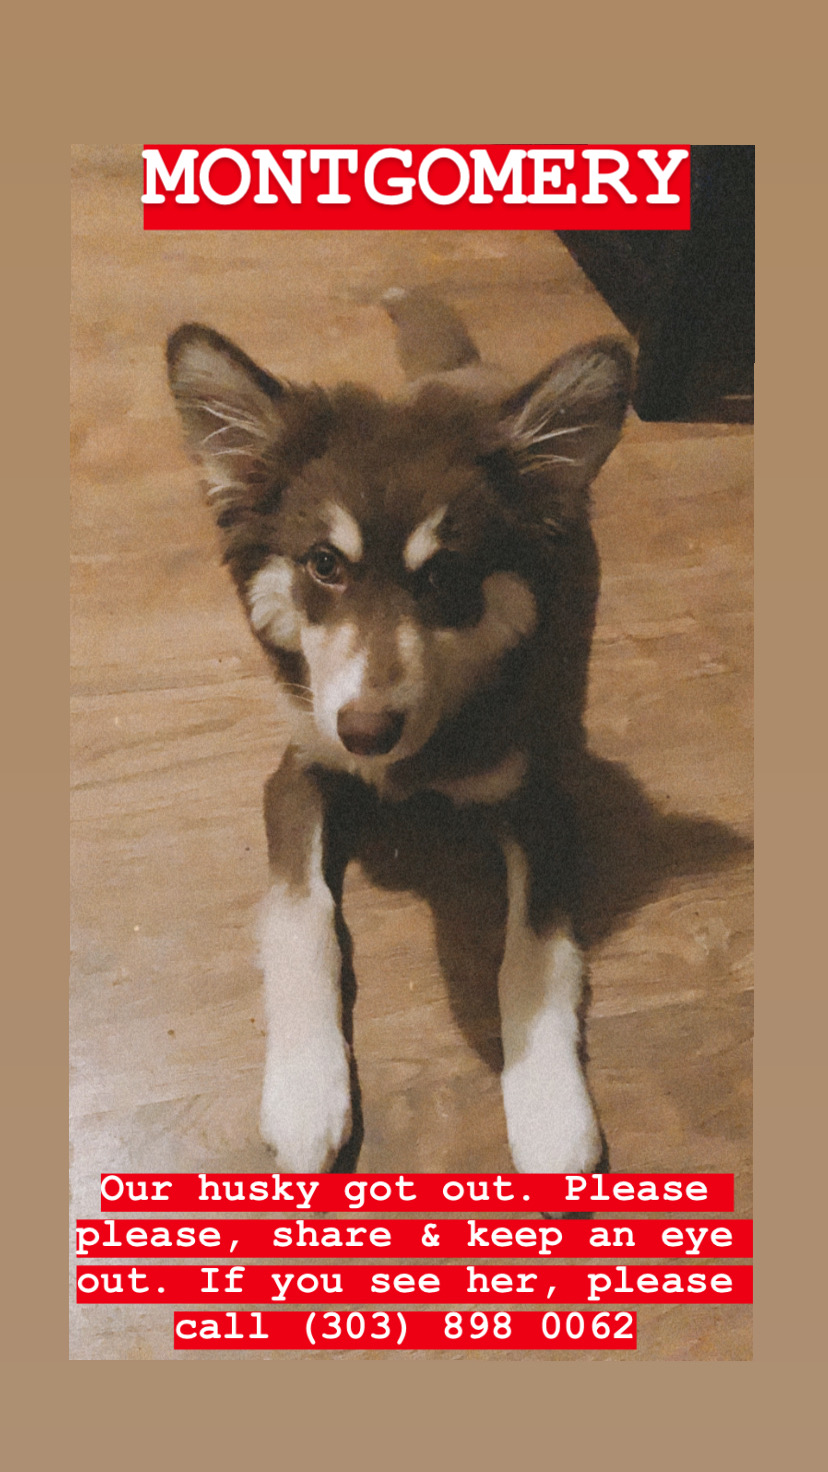 Image of Koda, Lost Dog